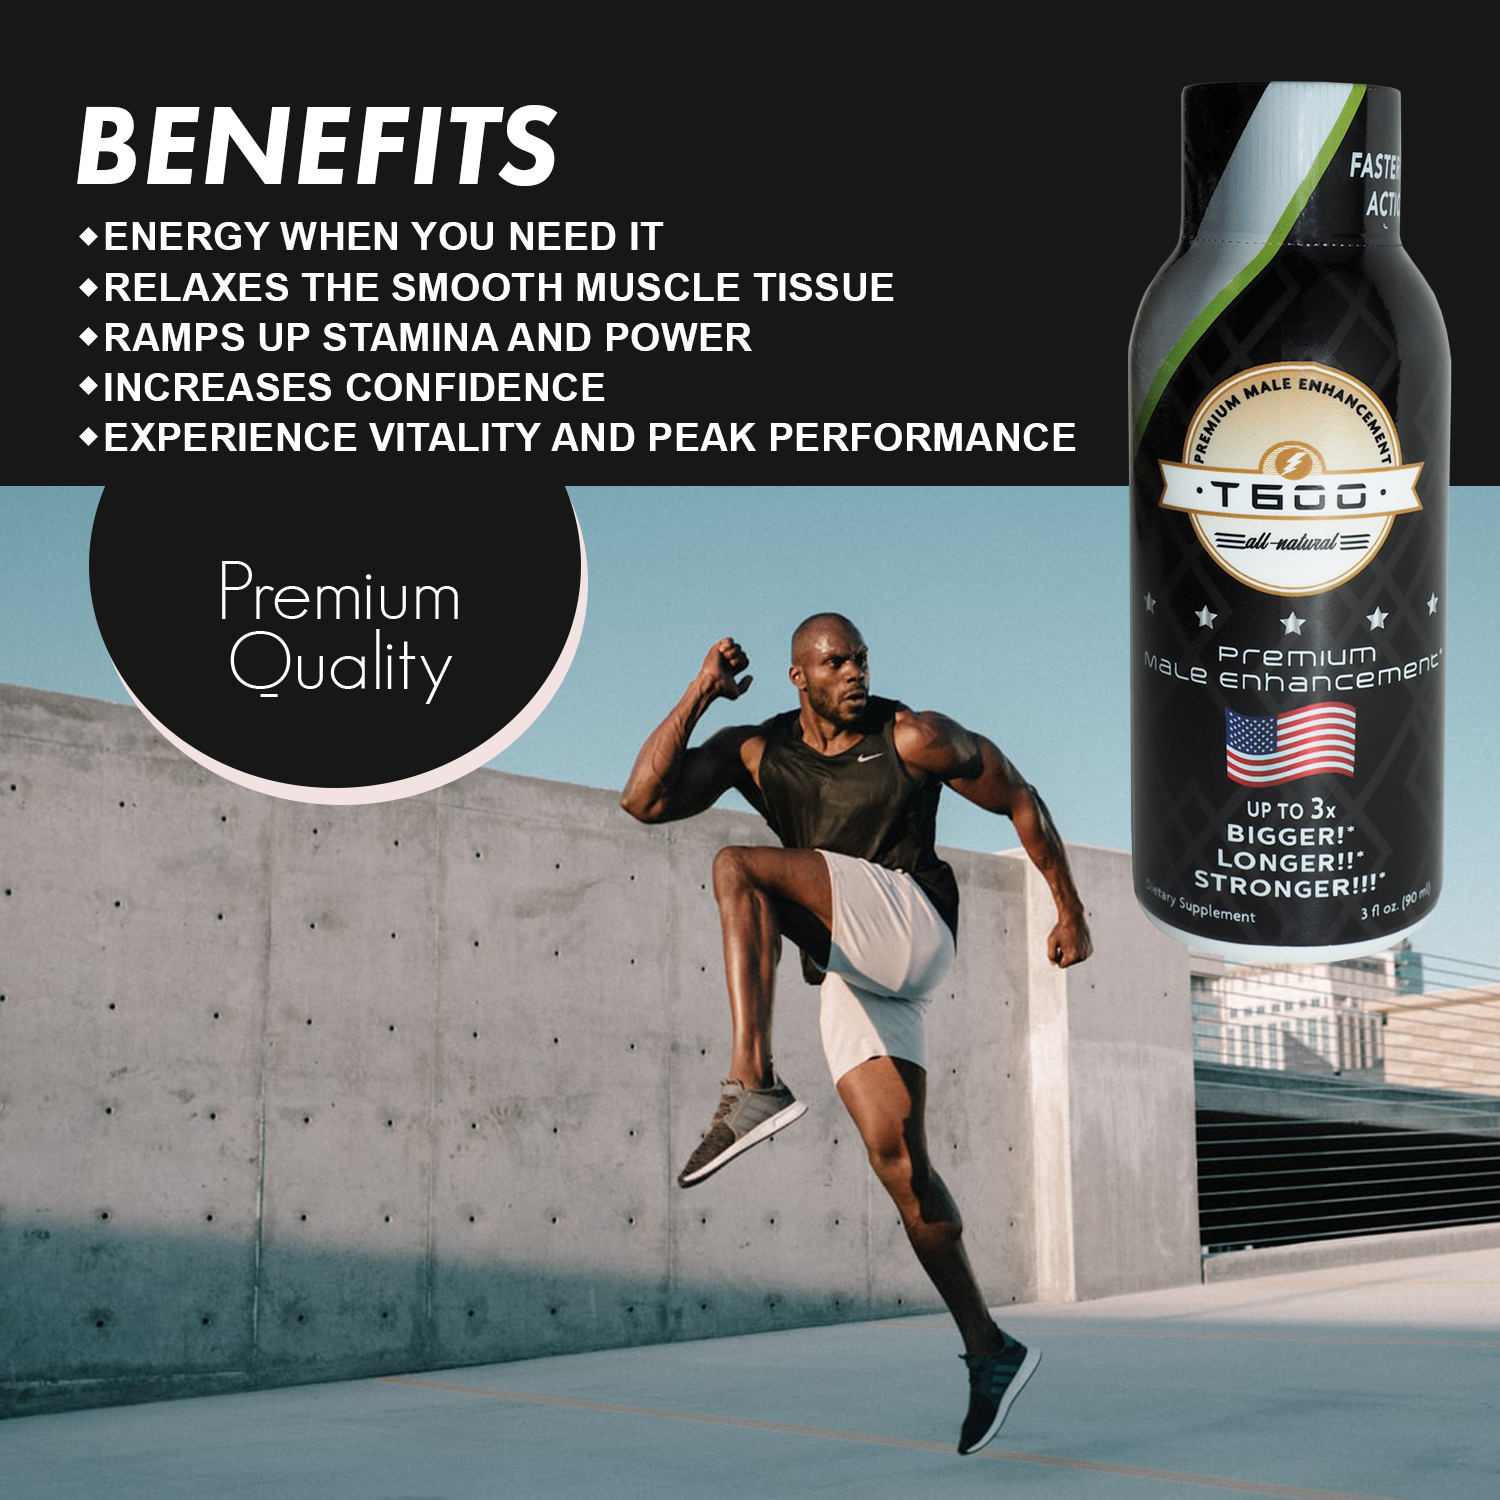 T600 Premium Male Enhancement, Natural Muscle and Energy Booster, 3 fl oz. Liquid Shot - Coffee Flavor